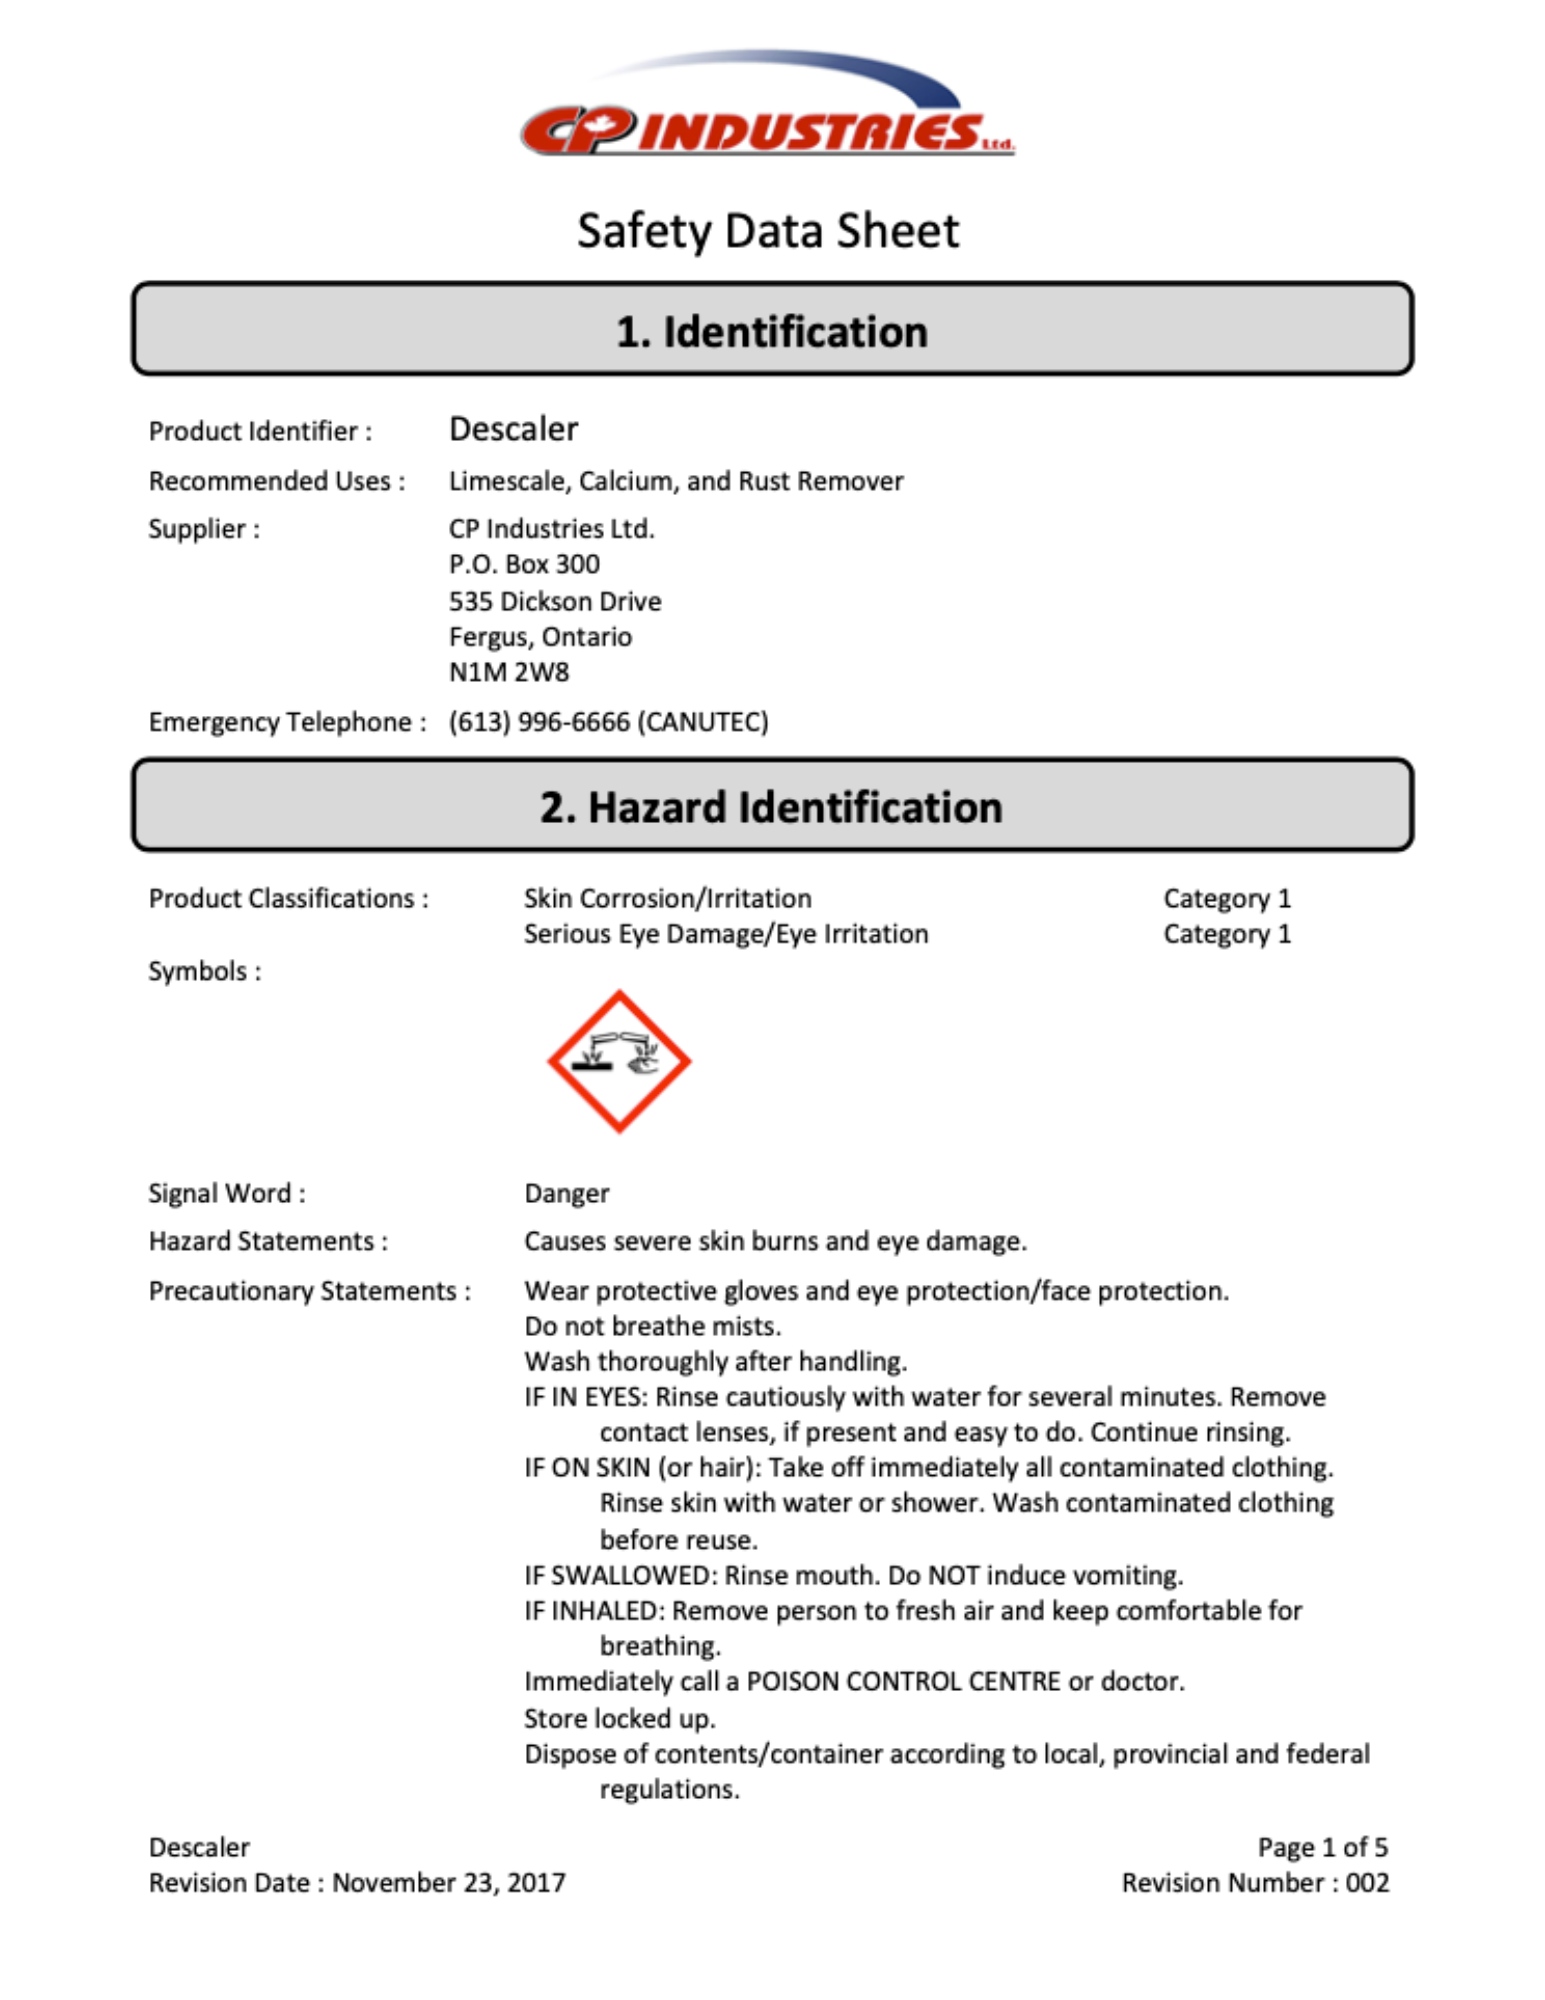 CP Industries Safety Data Sheet on Descaler.